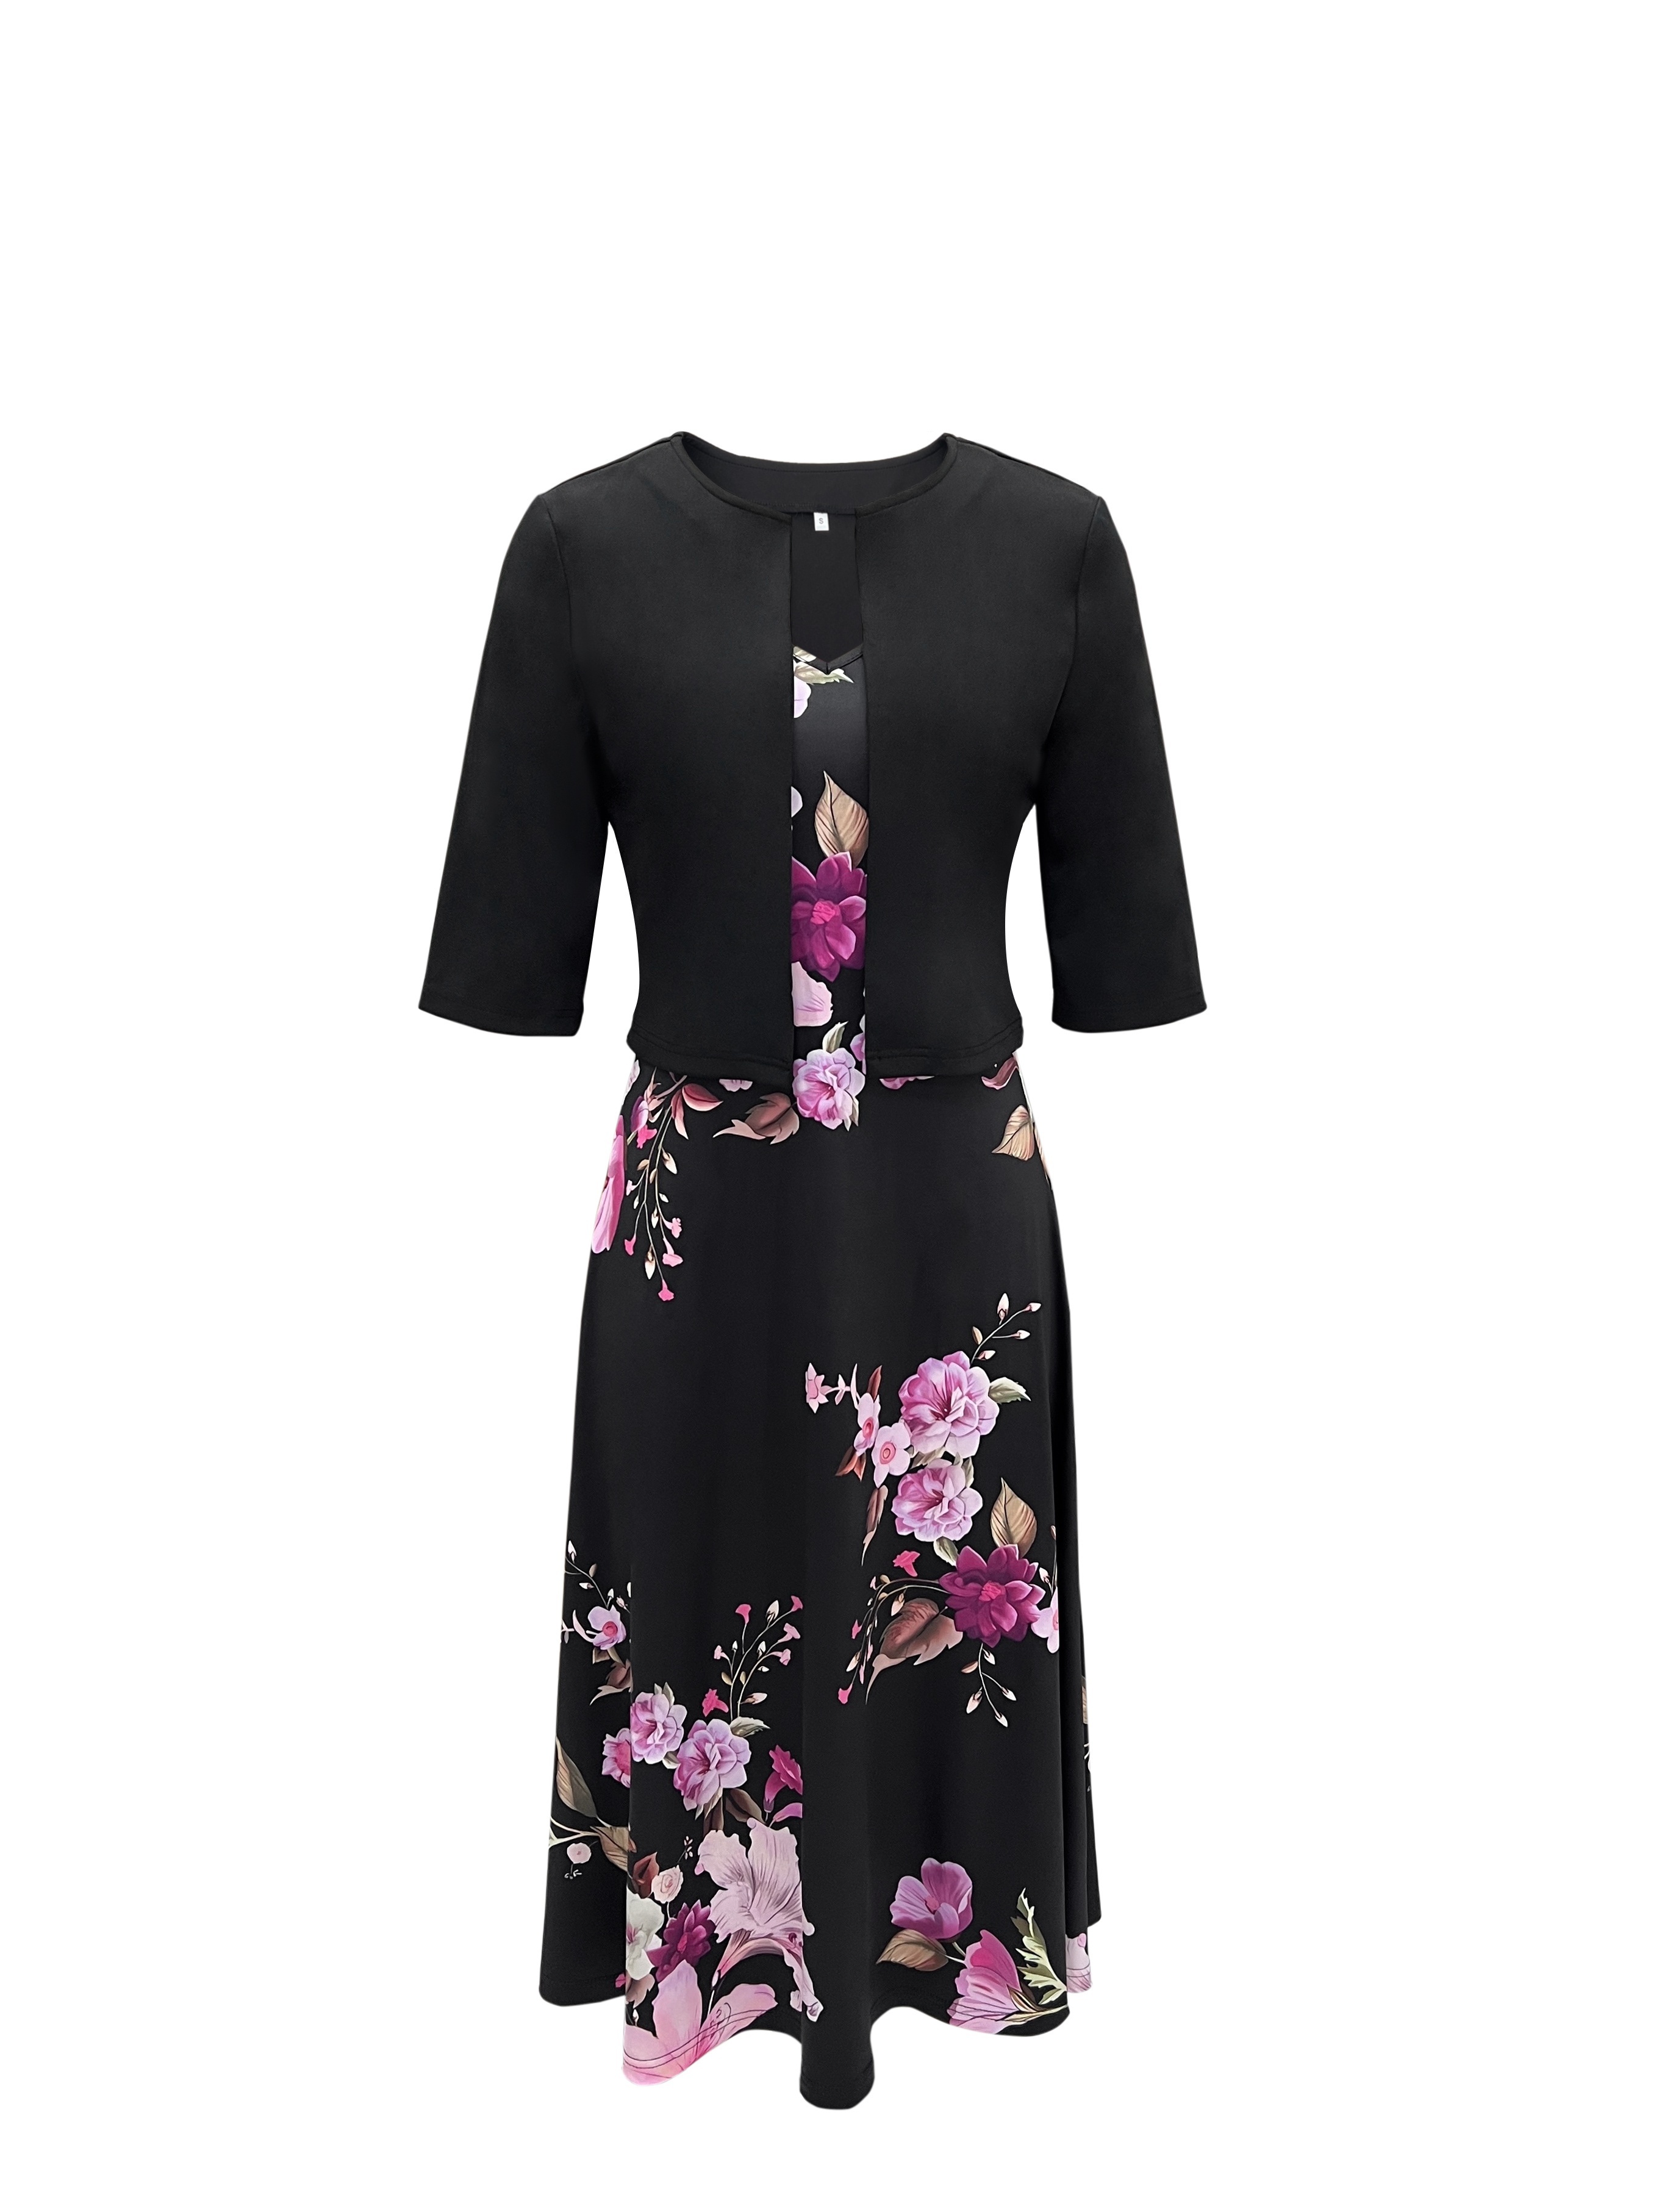 elegant floral print dress set crop open front three quarter sleeve top v neck a line tank dress outfits womens clothing